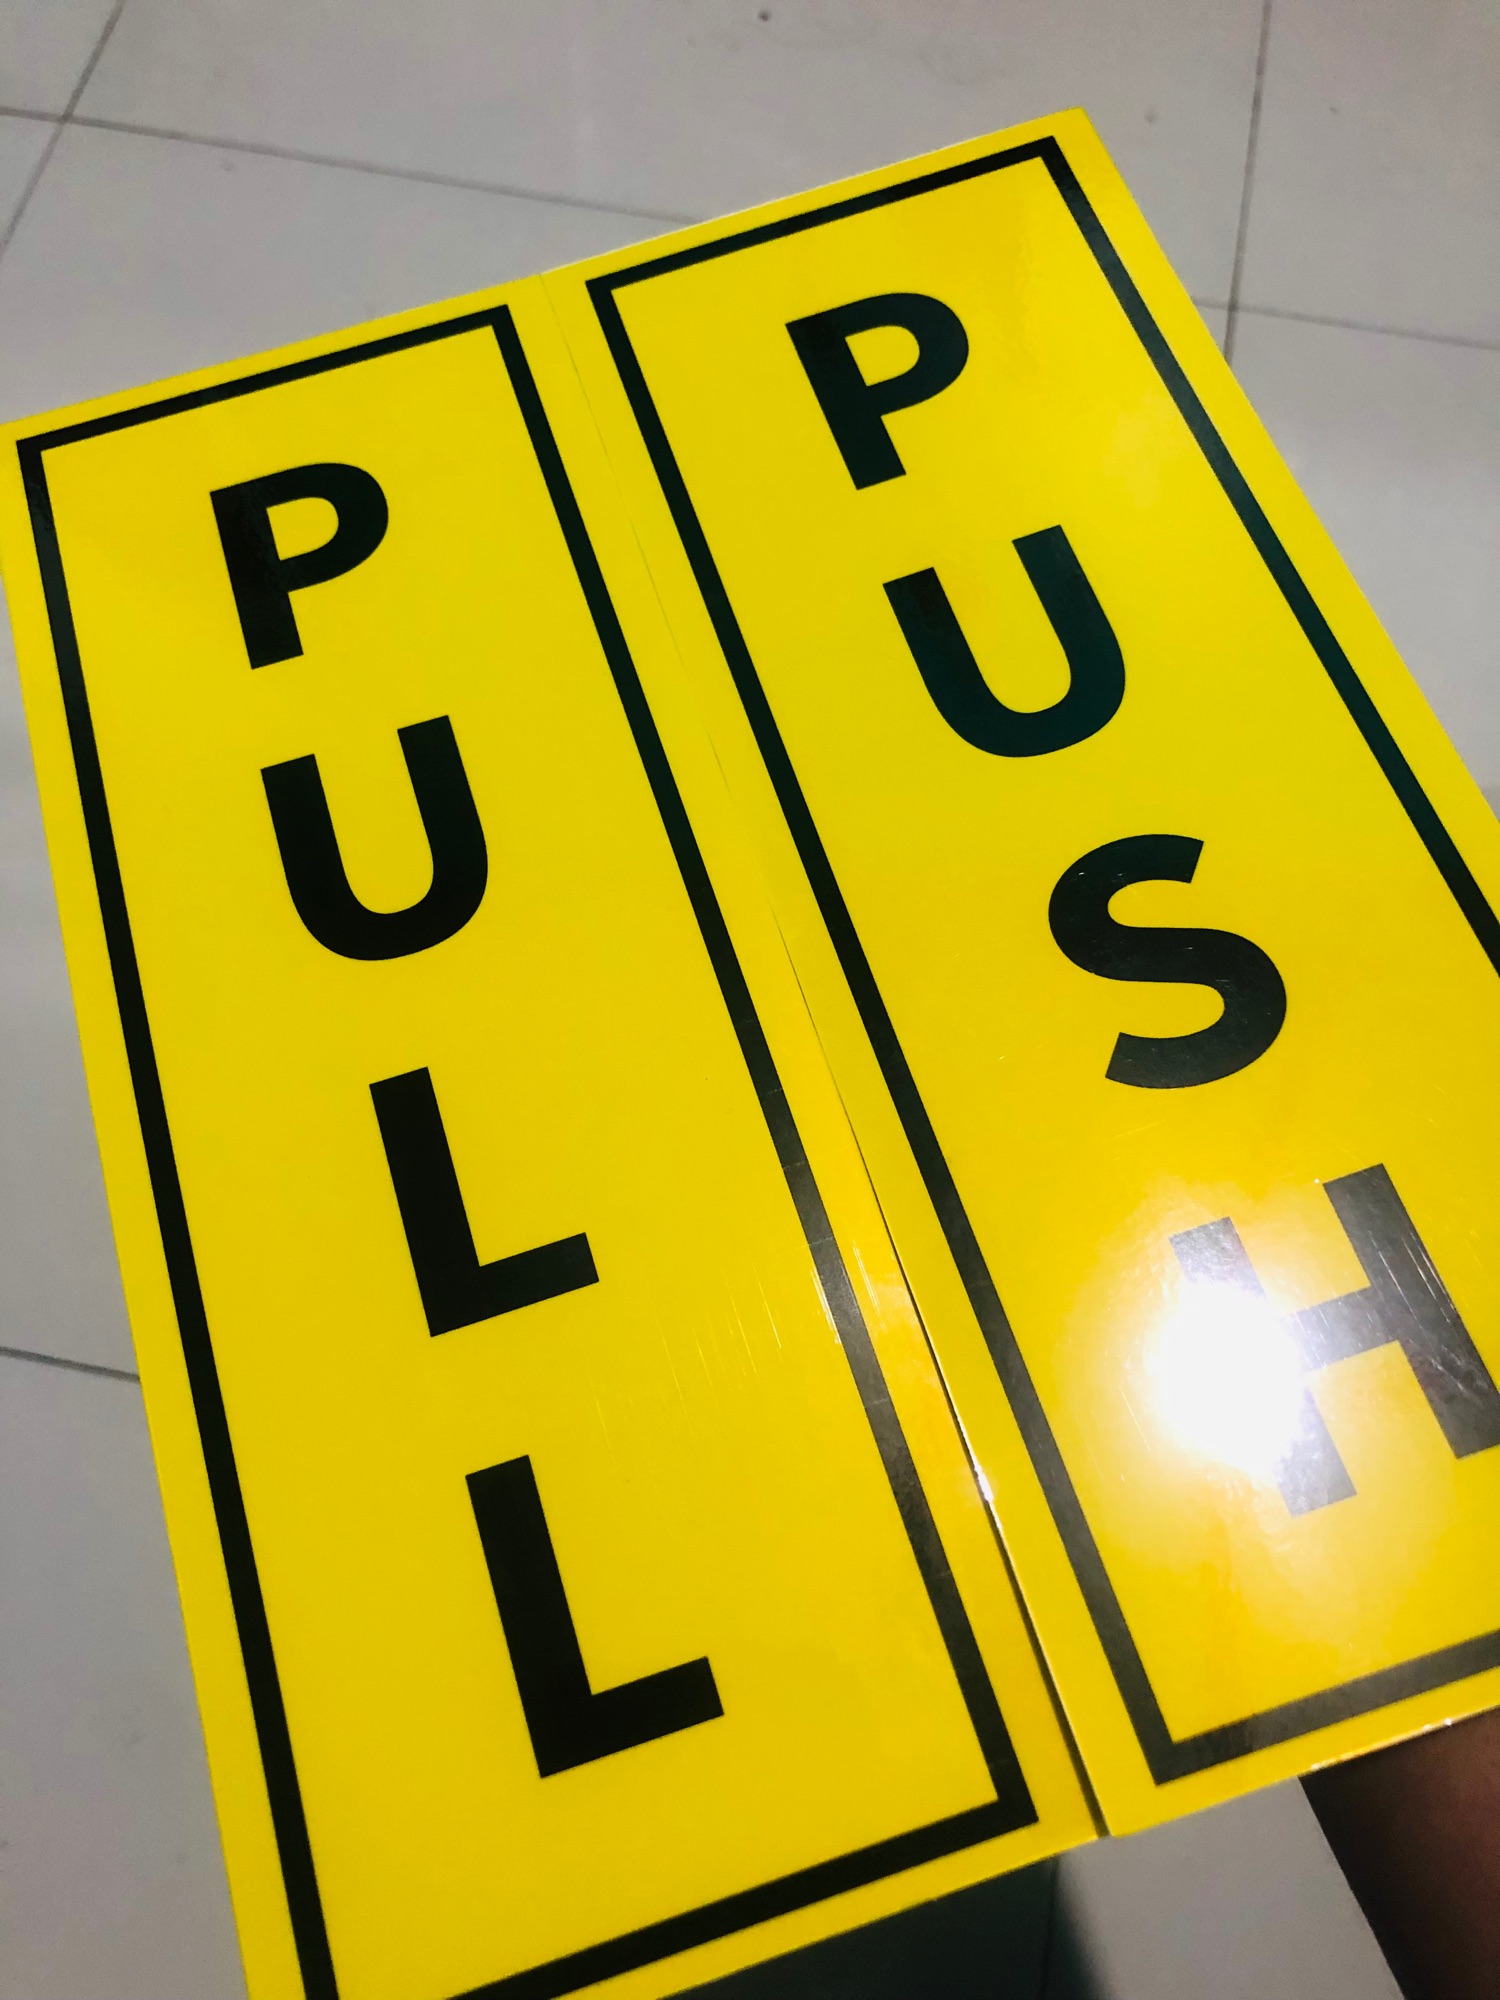 Push Pull Signage